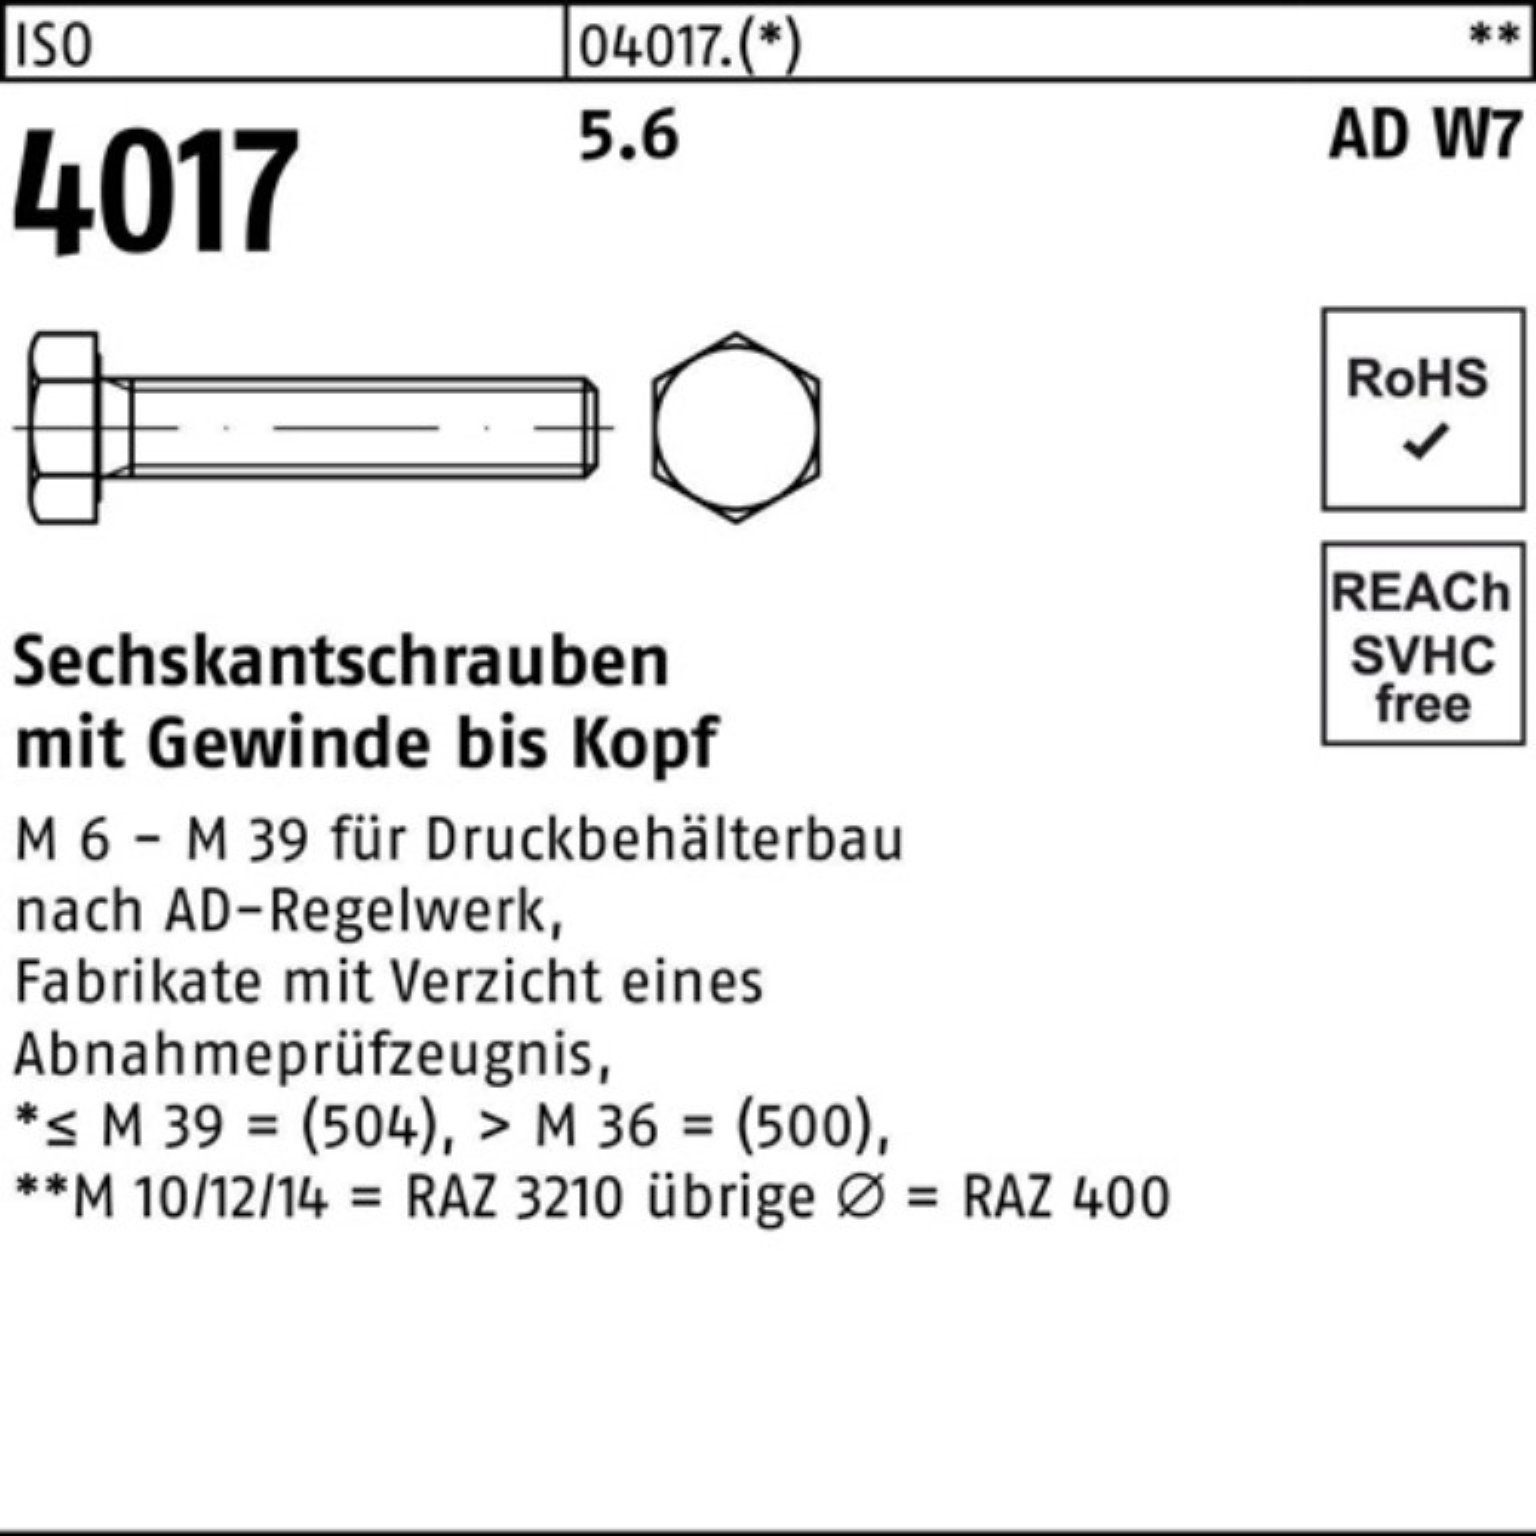 Bufab Sechskantschraube 100er Pack Sechskantschraube ISO 4017 VG M16x 90 5.6 AD W7 25 Stück I